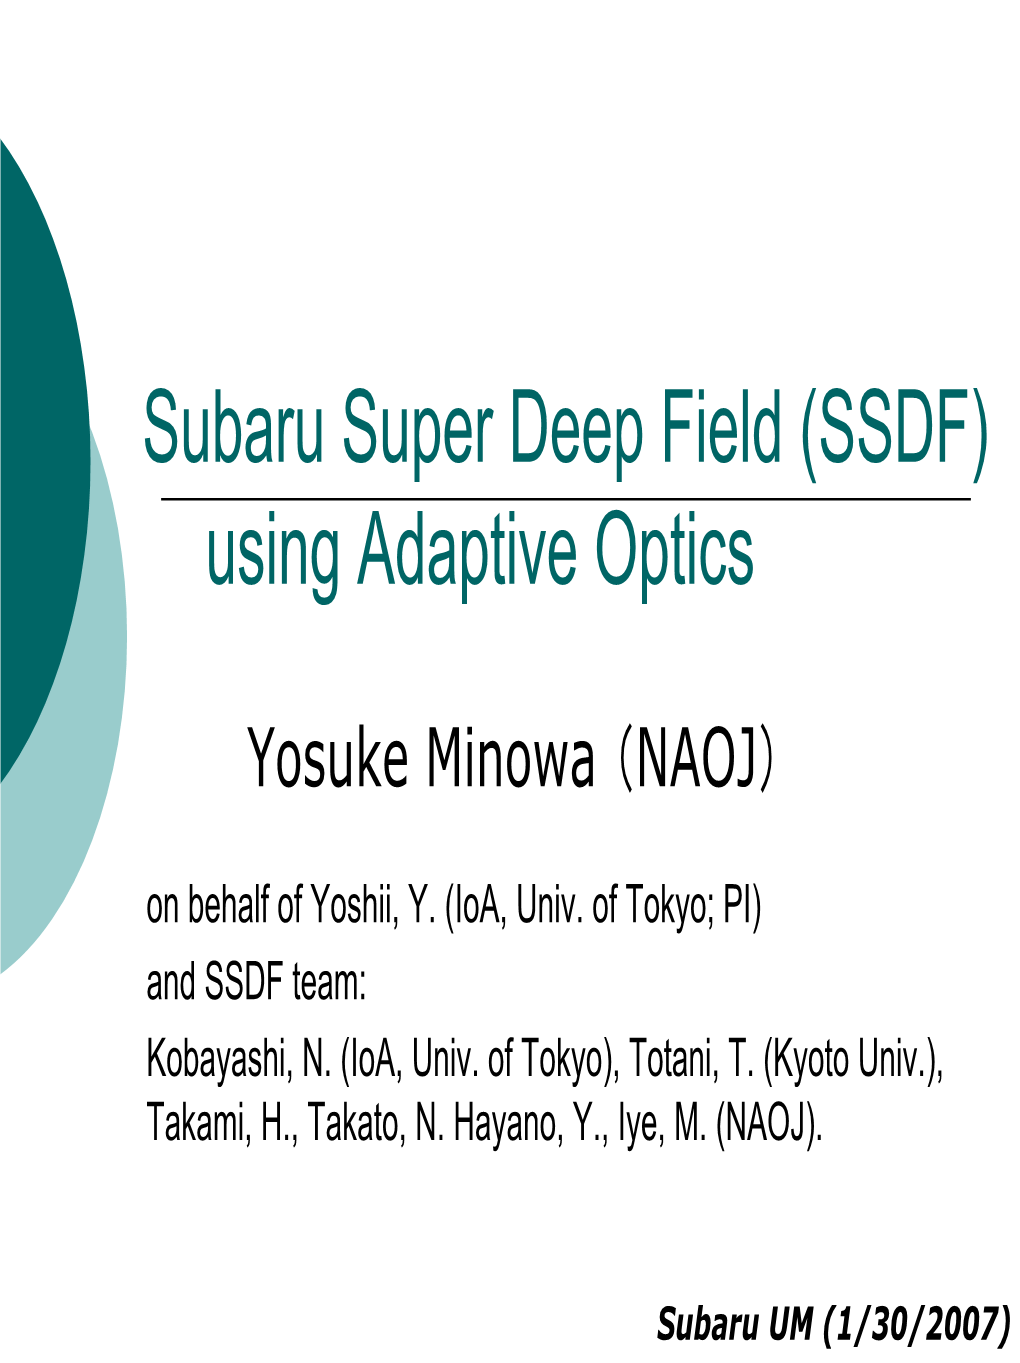 Subaru Super Deep Field (SSDF) with AO